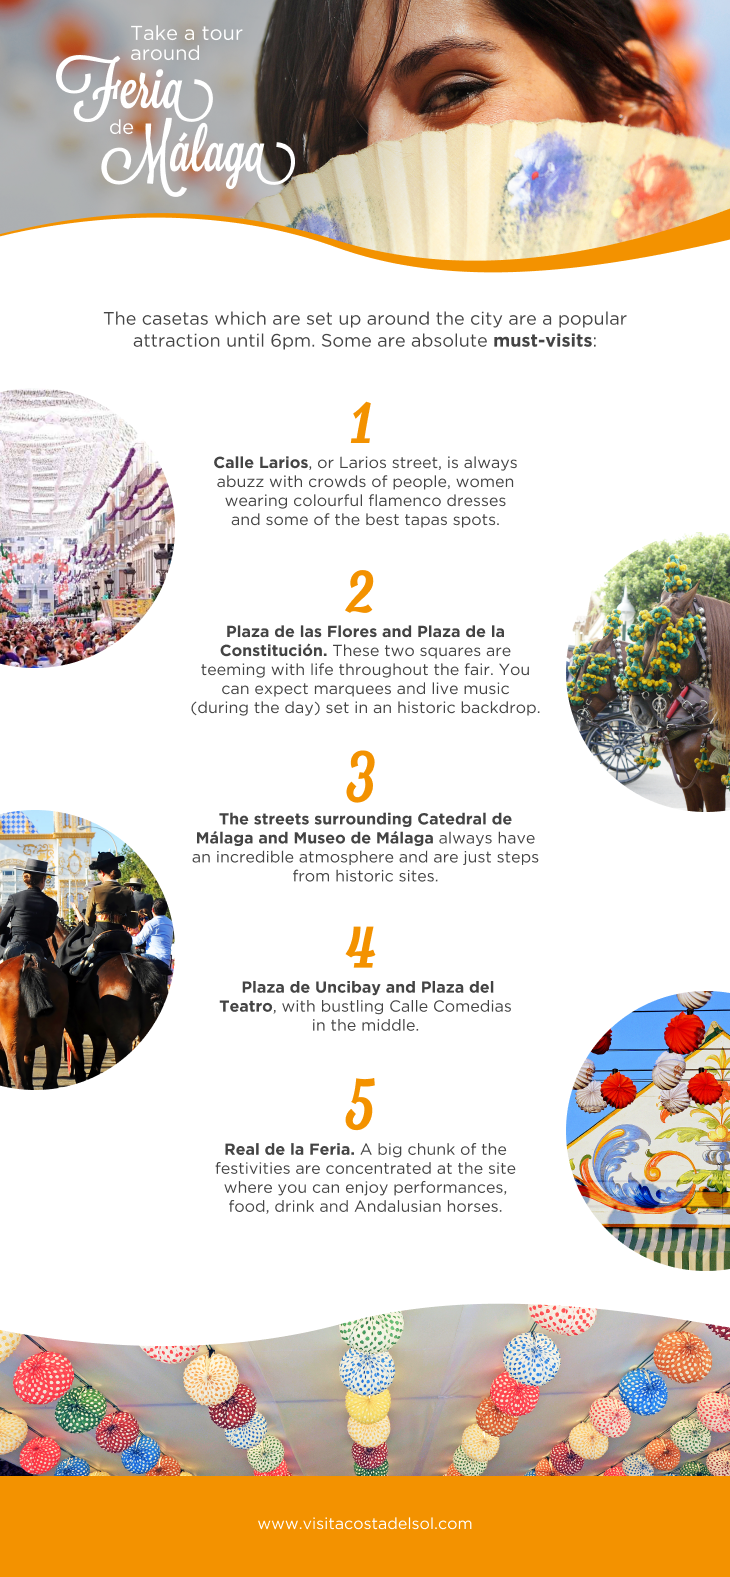 csol_infografia_8_Feria de malaga EN